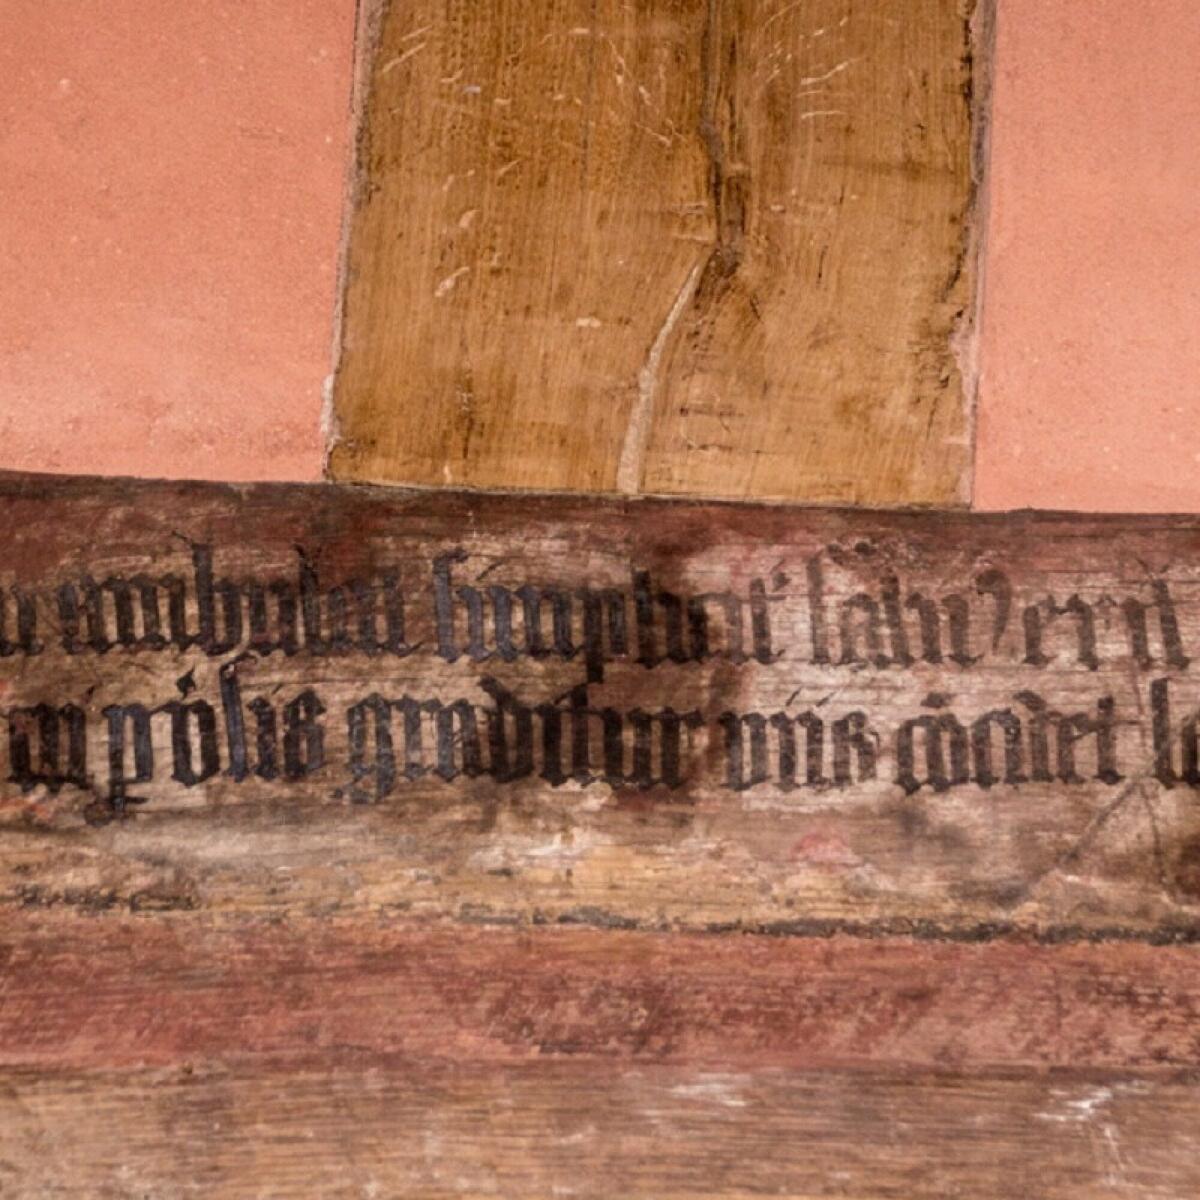 Tudor Latin inscriptions